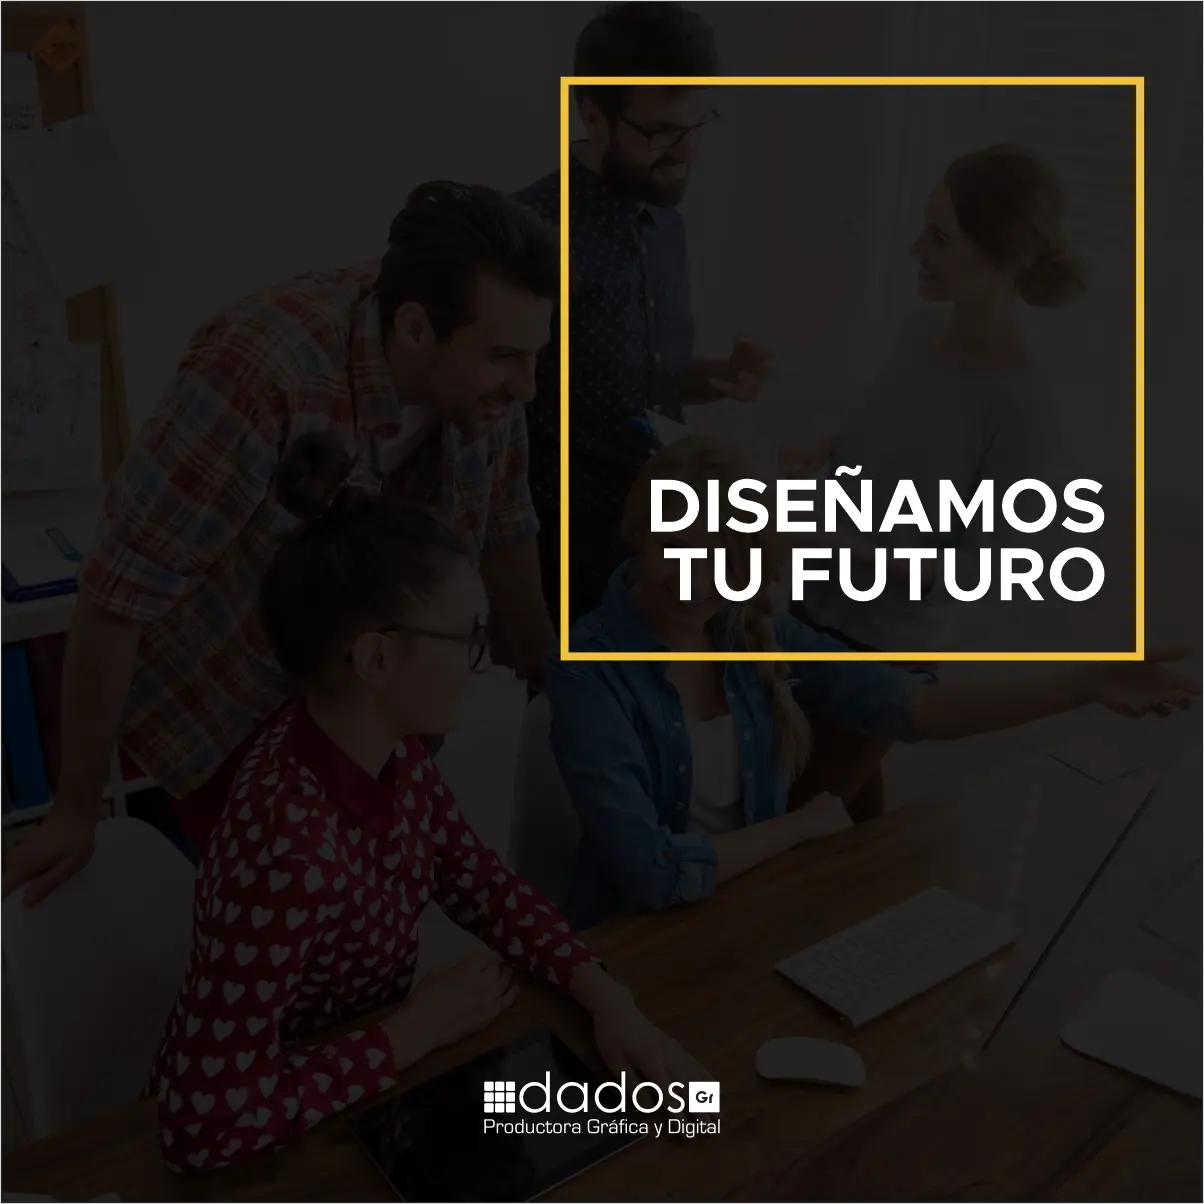 post dados group 2021 - diseñamos tu futuro